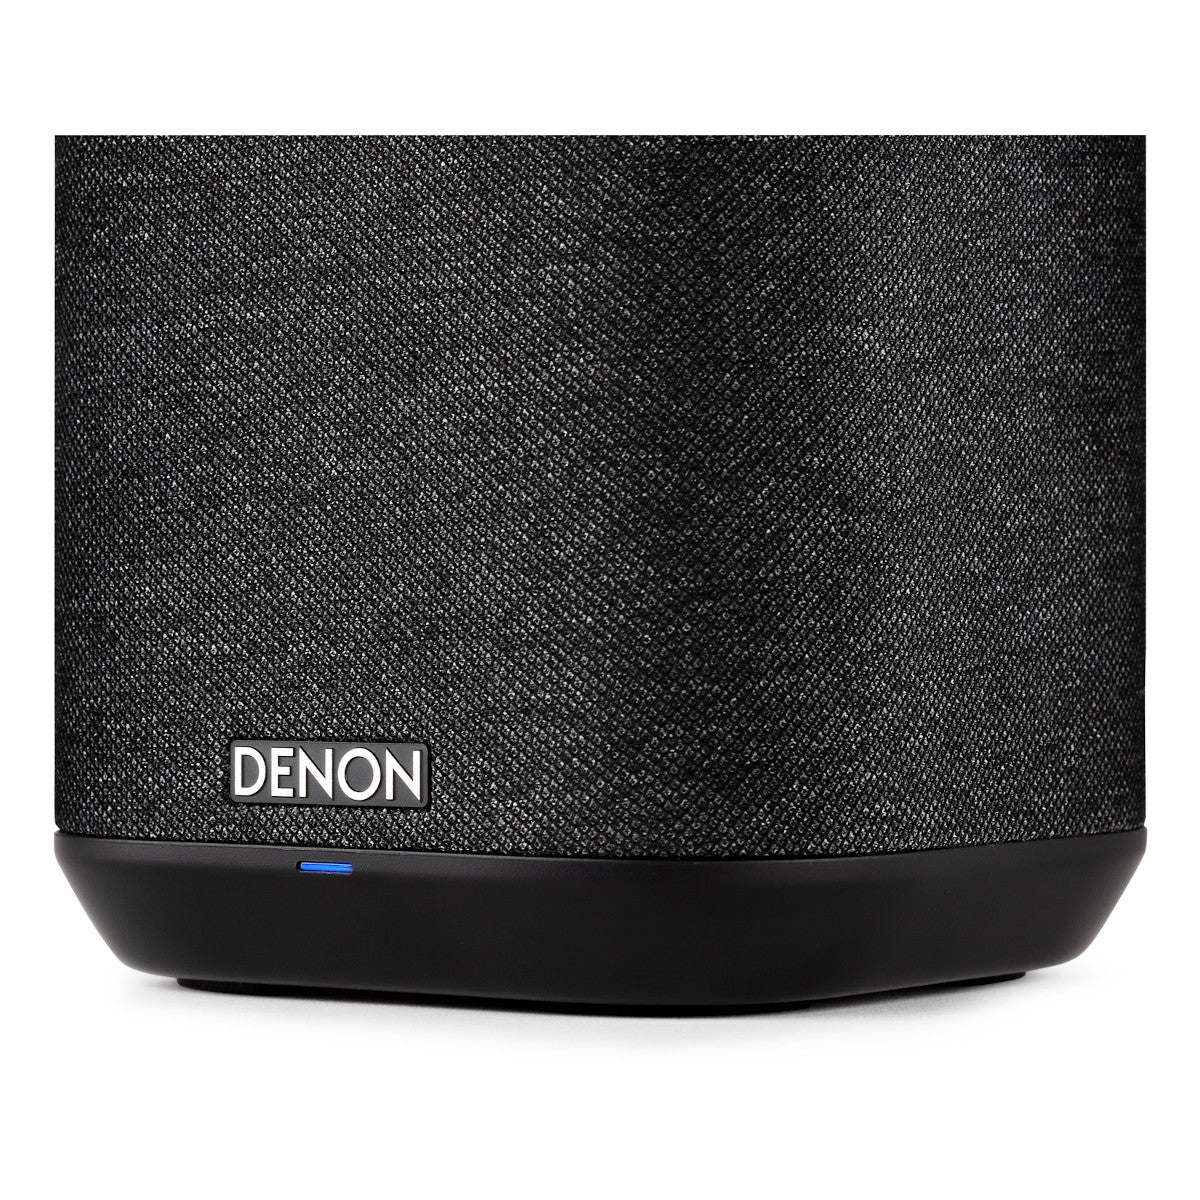 Denon Home 150 Wireless Streaming Speaker (Factory Certified Refurbished, Black) - Pair